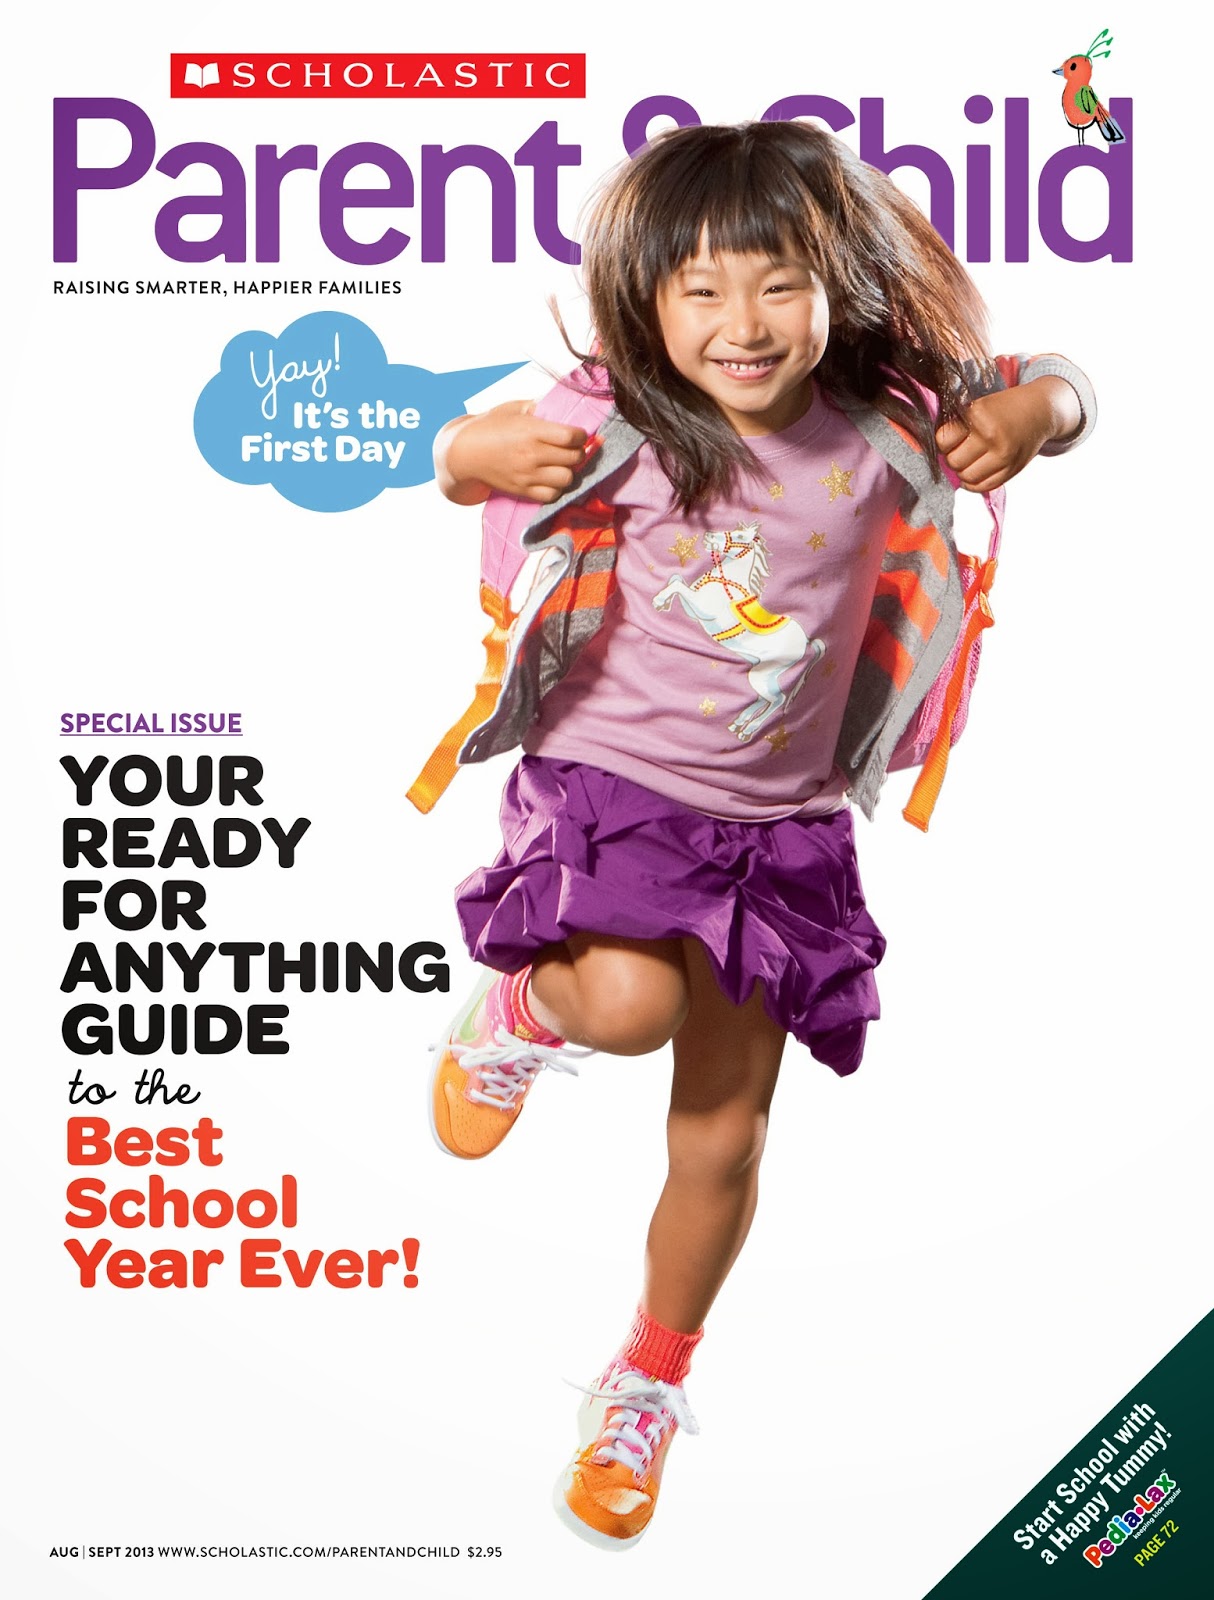 Coupon STL: Shcolastic Parent & Child Magazine Subscription - $4.50/year